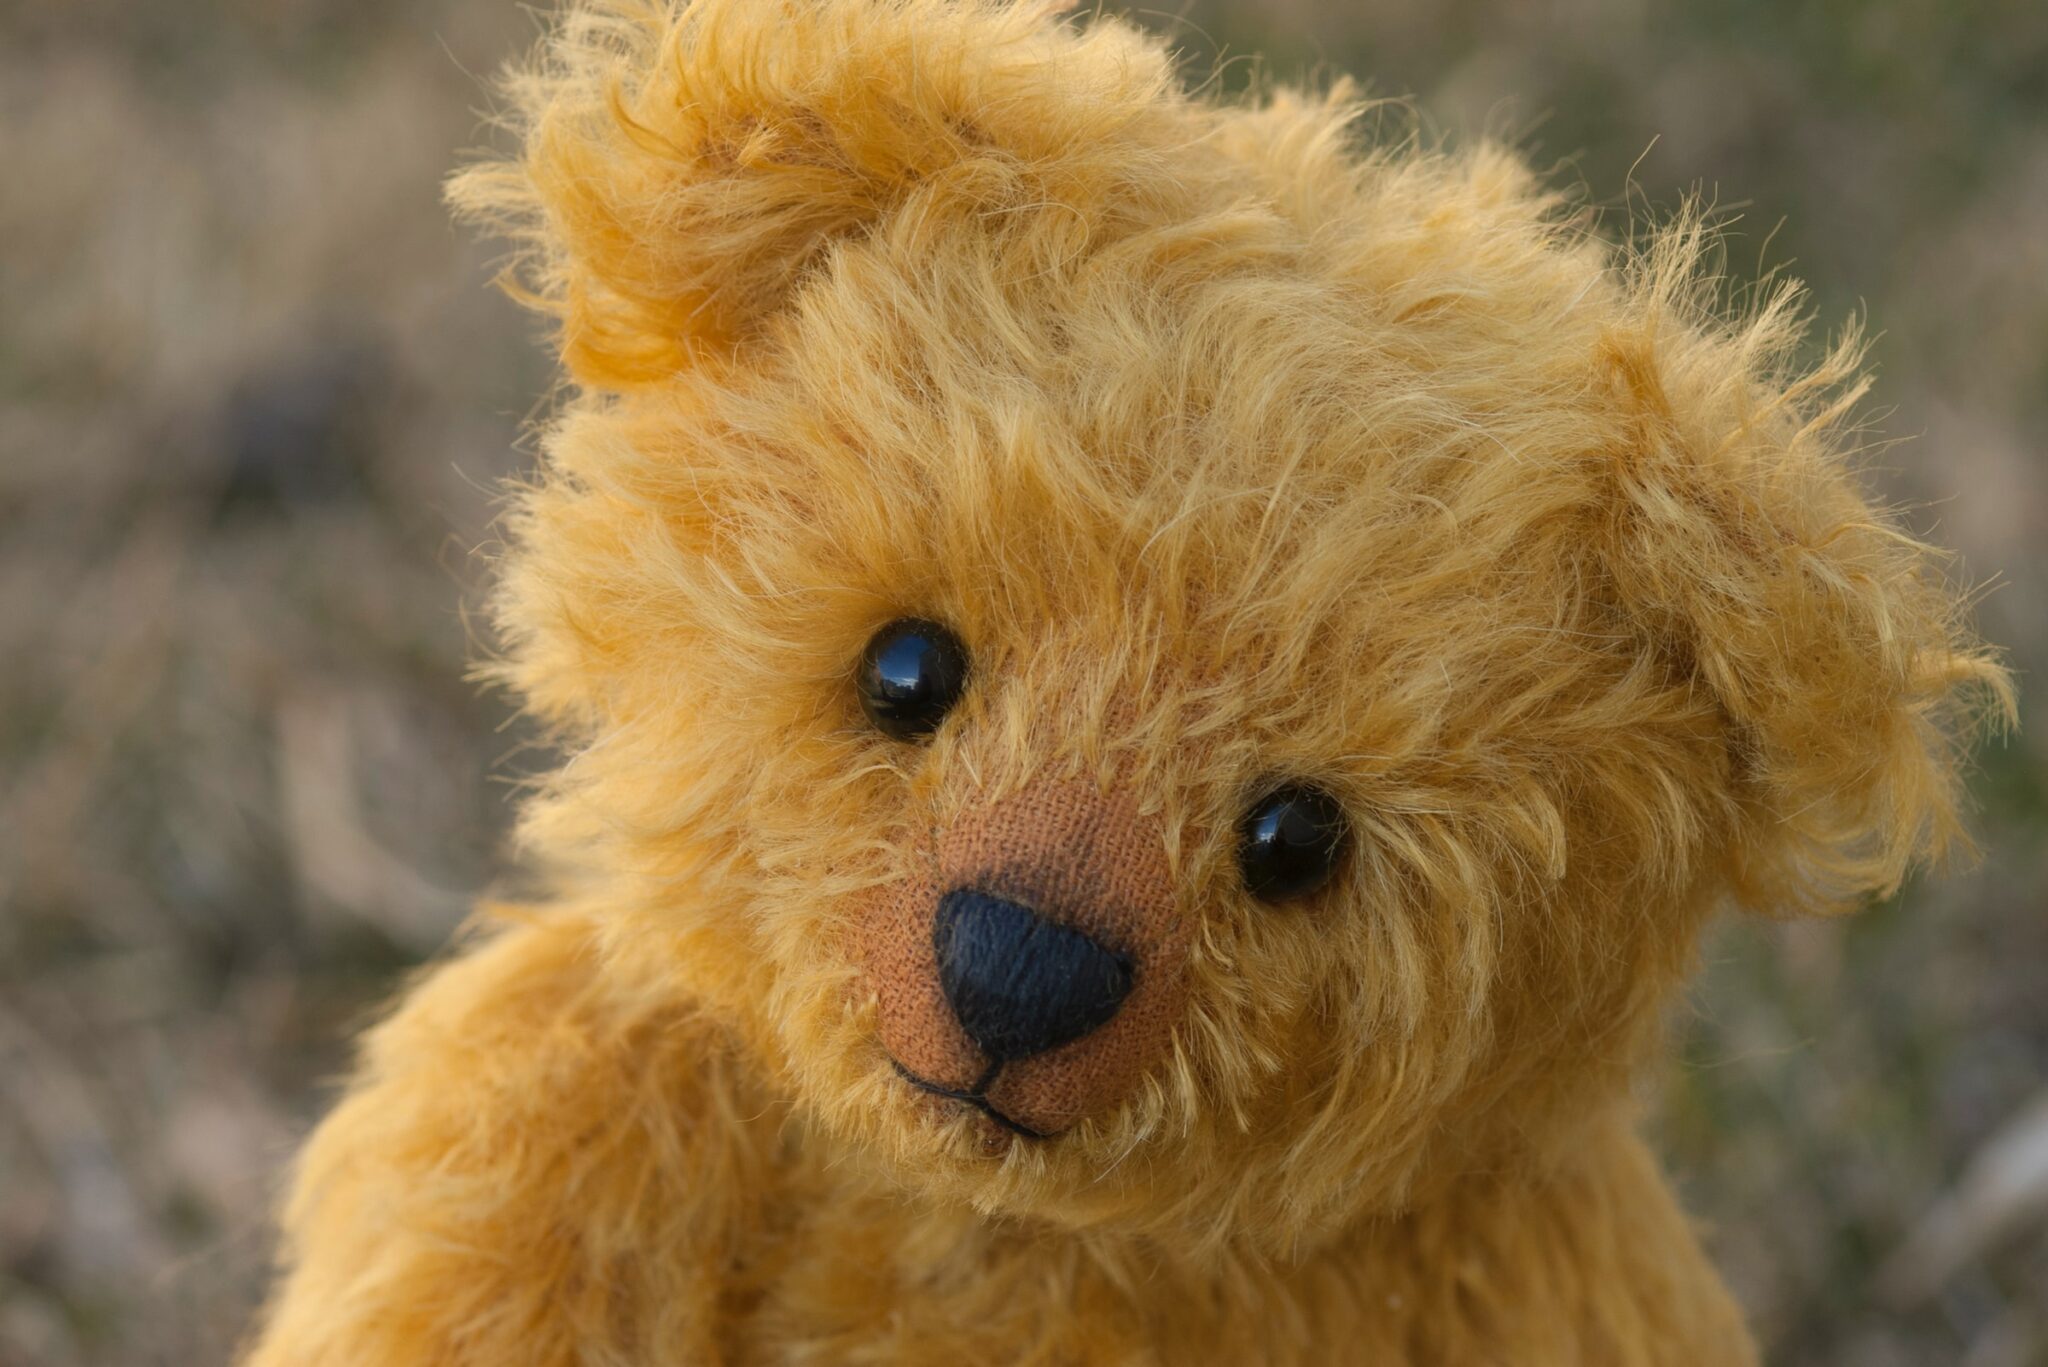 Balenciaga: a Timeline of the Holiday Teddy Bear Ad Controversy